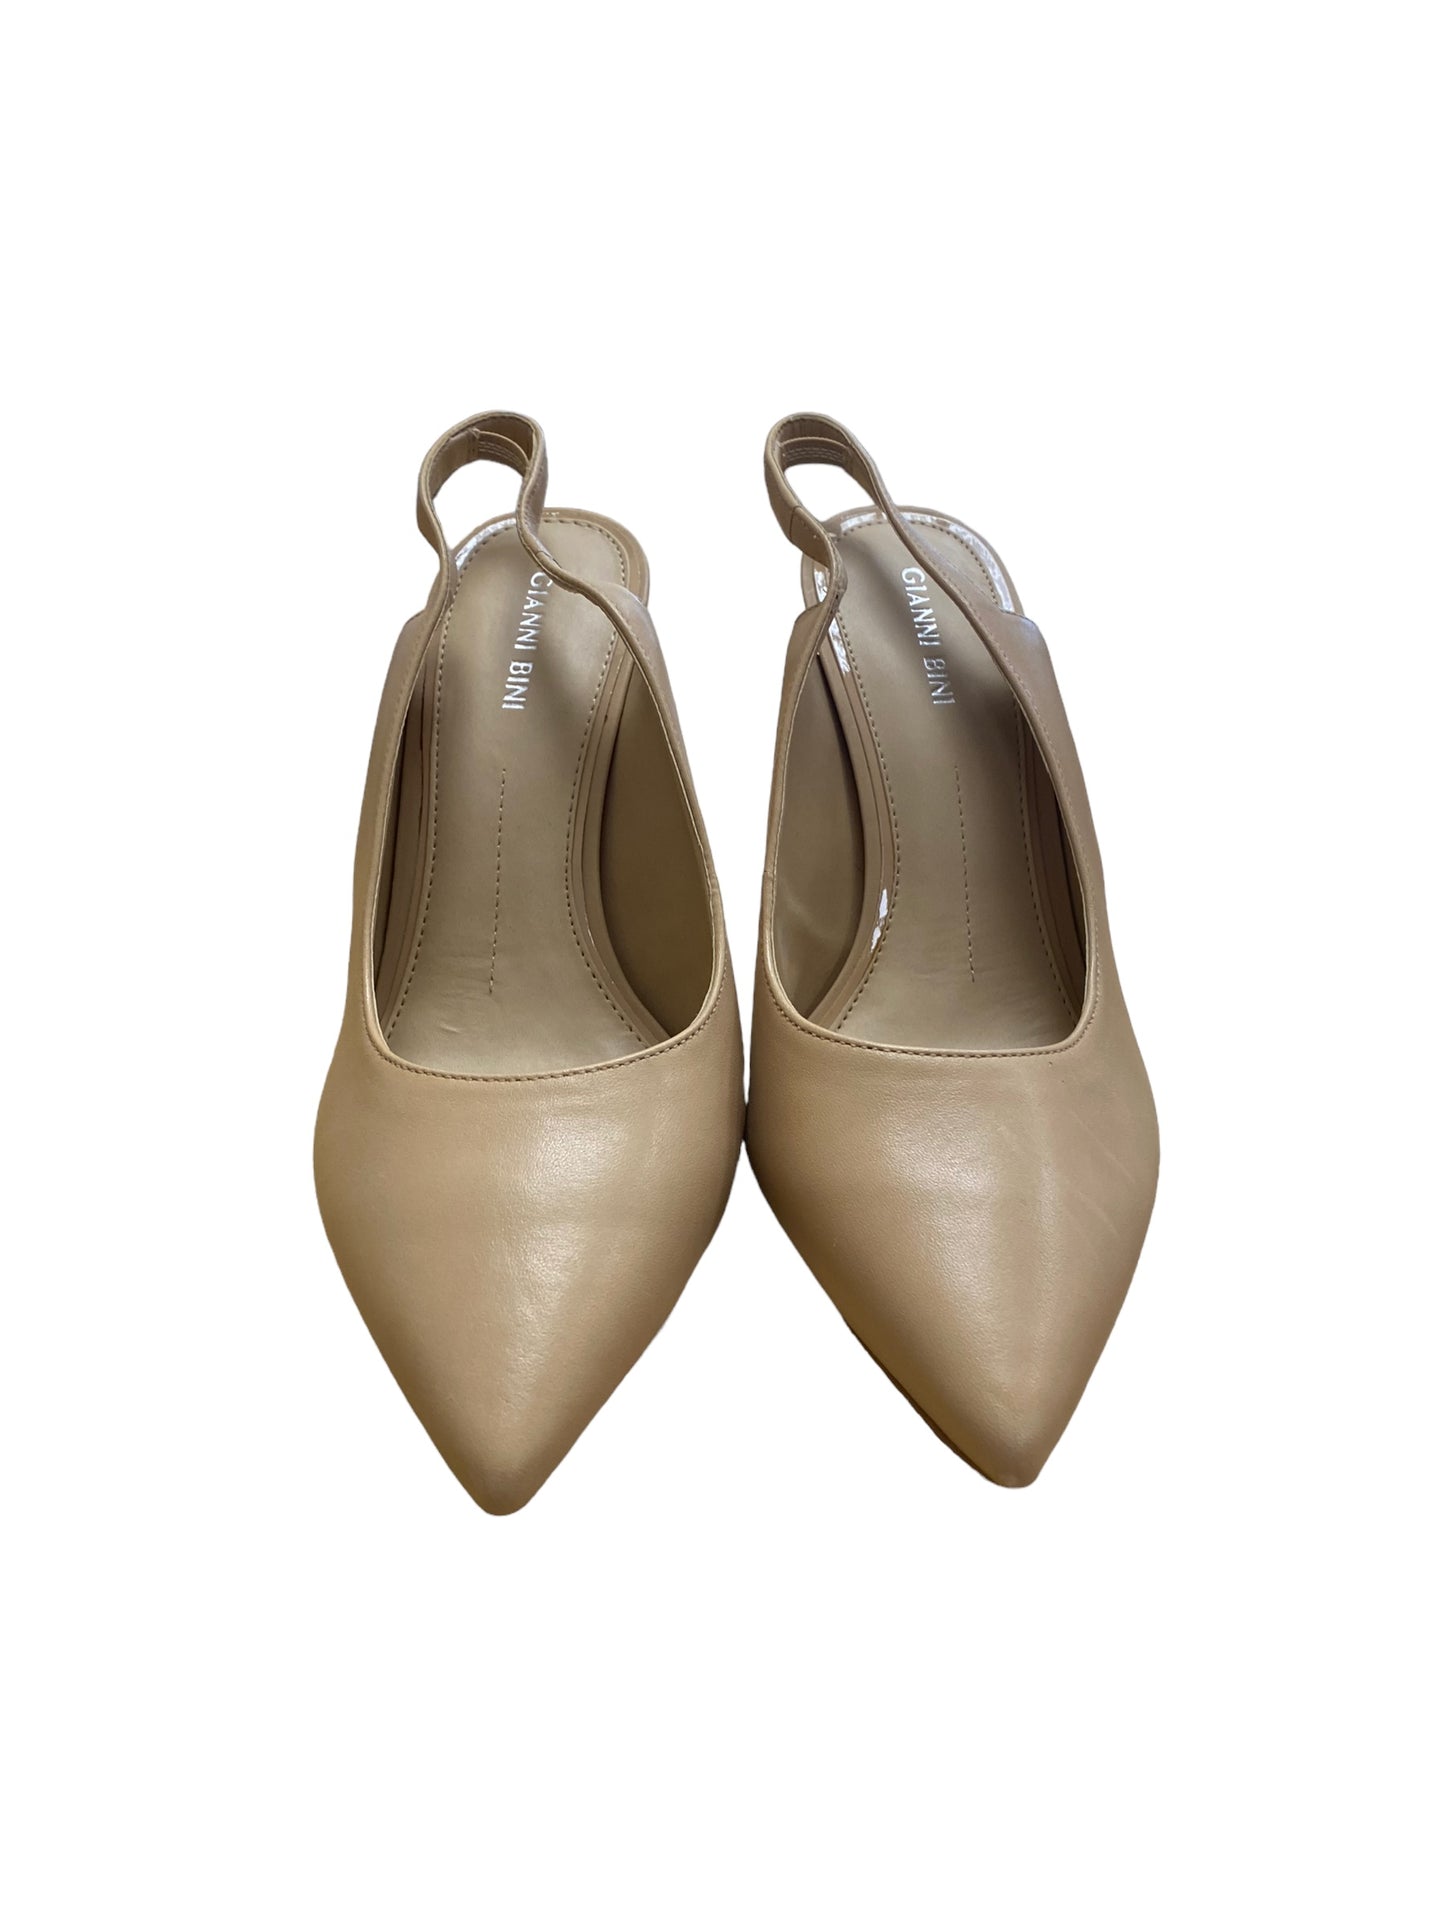 Shoes Heels Stiletto By Gianni Bini  Size: 9.5